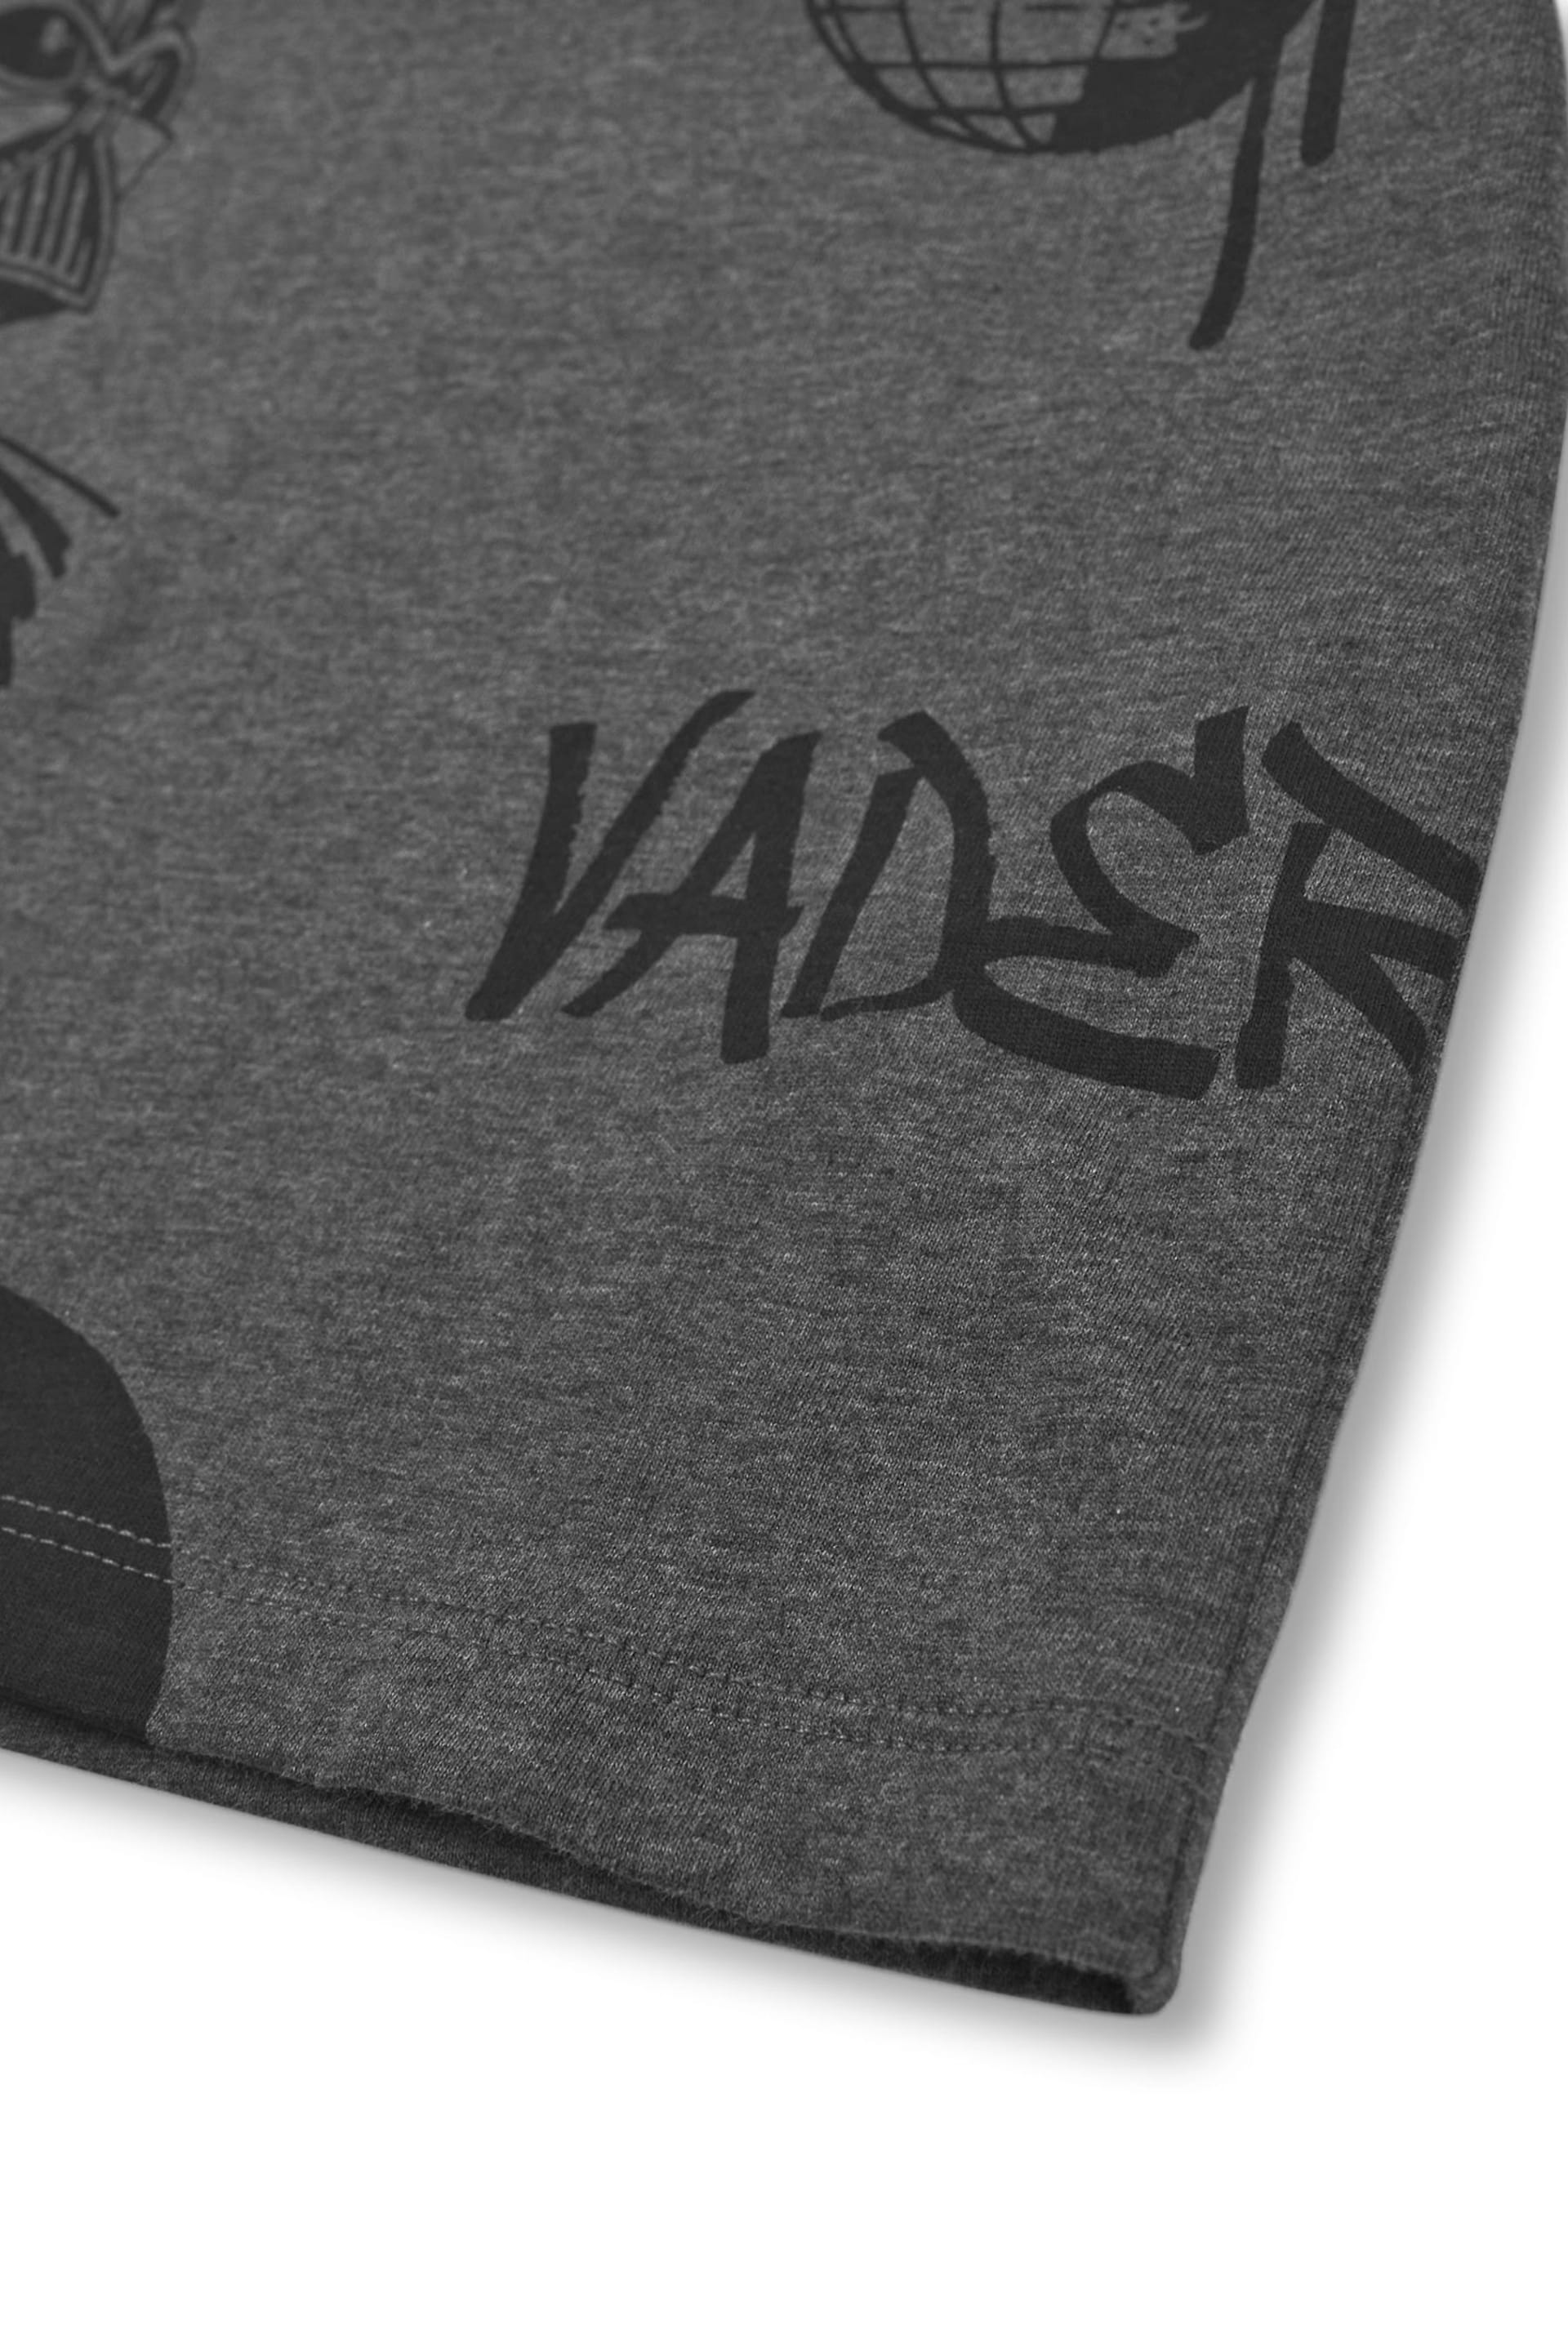 Vanilla Underground Grey Boys Star Wars T-Shirt - Image 6 of 6